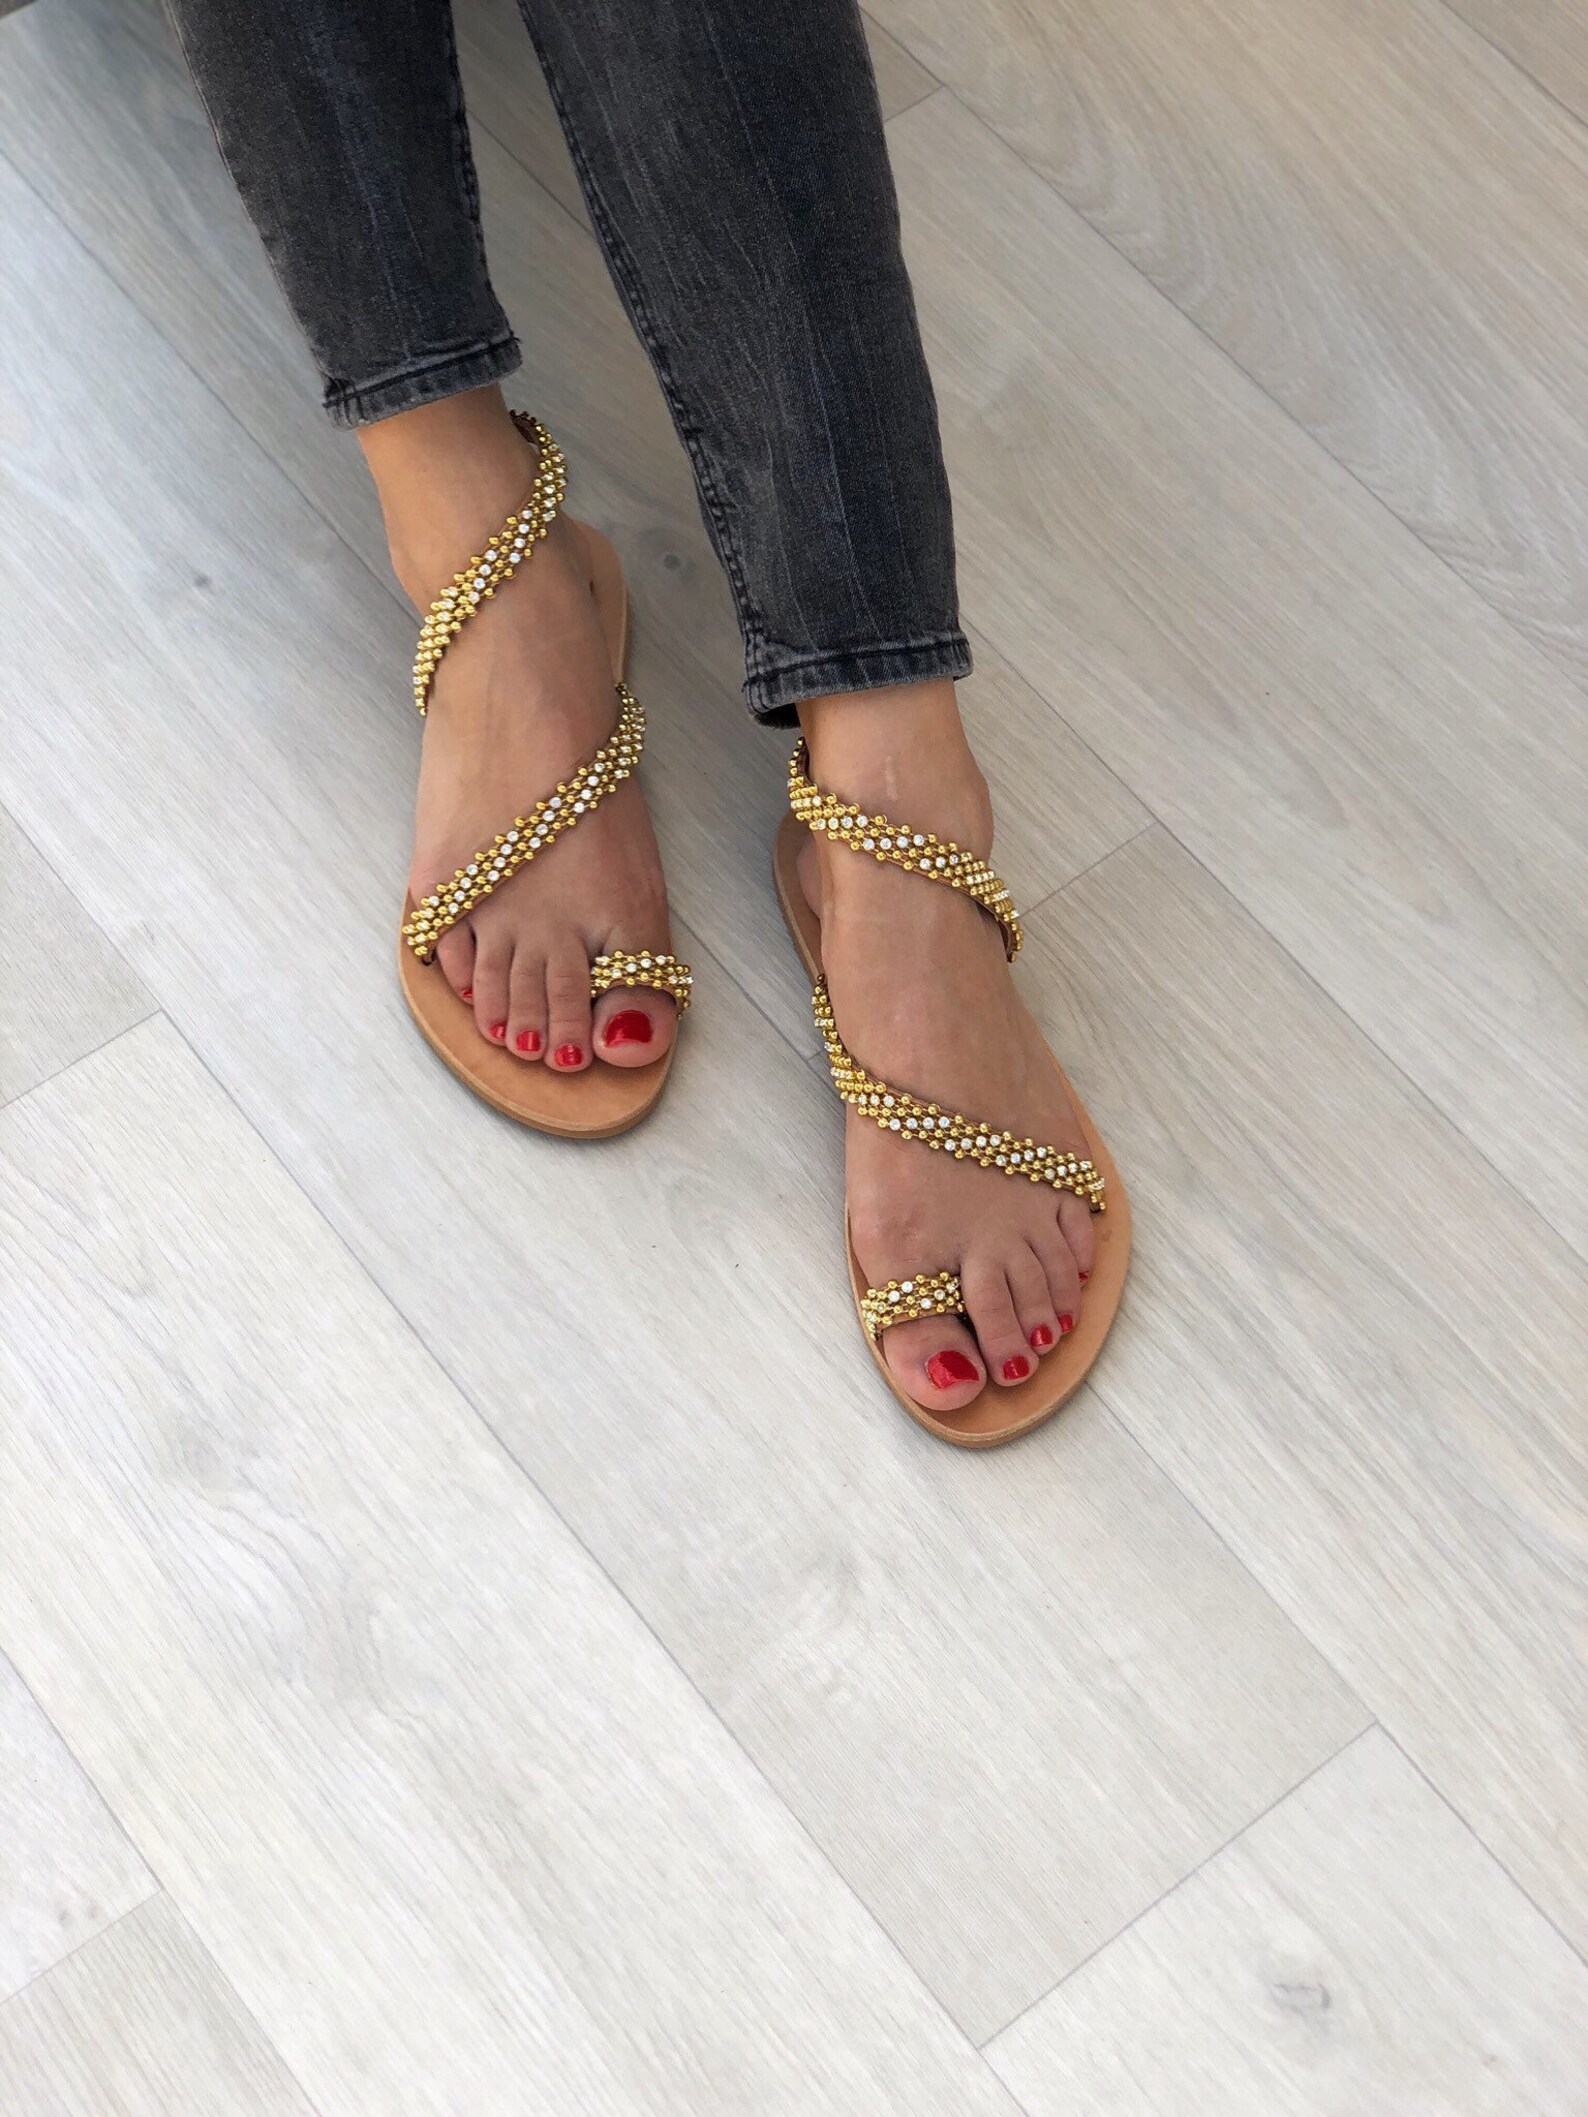 Gold Leather Sandals Pearls Sandals Wedding Sandals Summer - Etsy